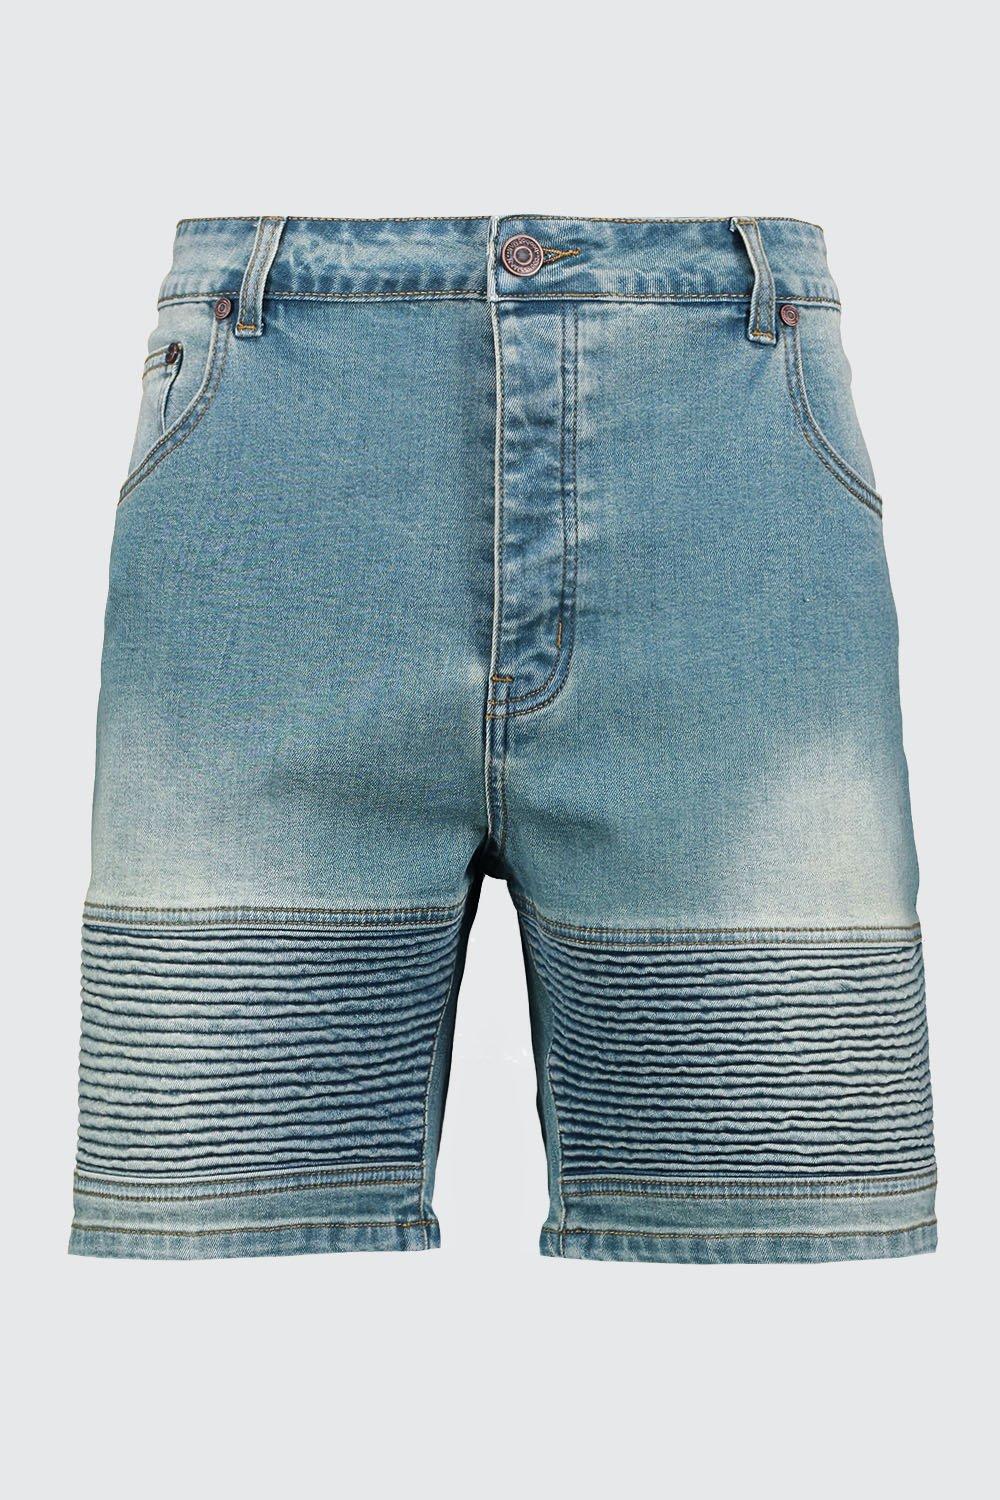 biker jeans shorts